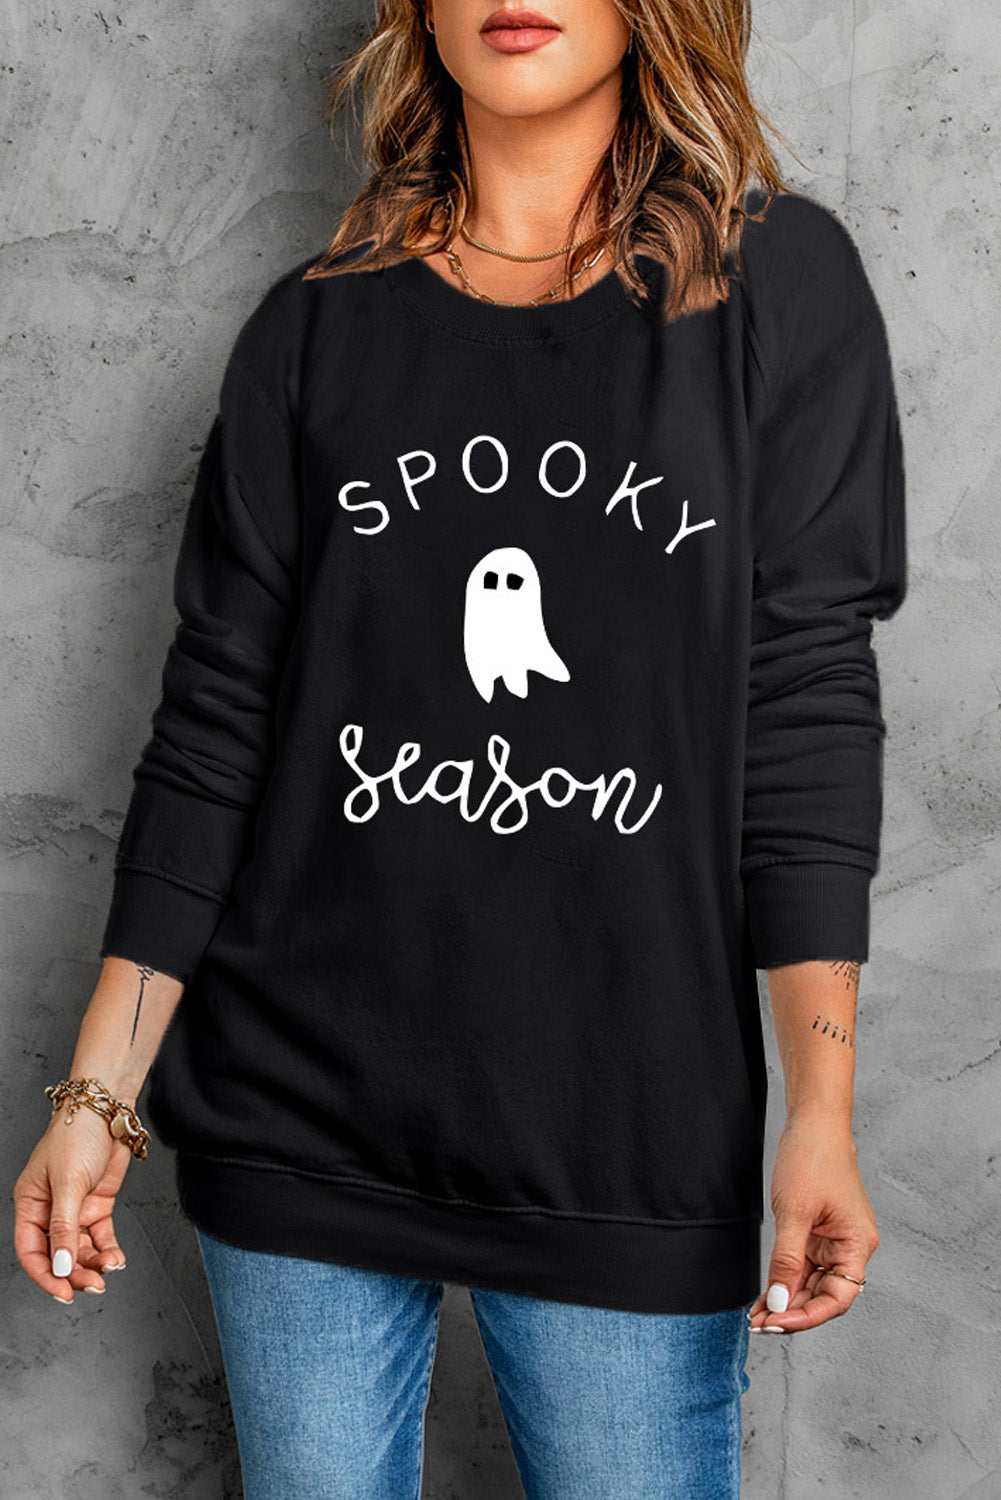 Black SPOOKY Season Ghost Print Graphic Sweatshirt